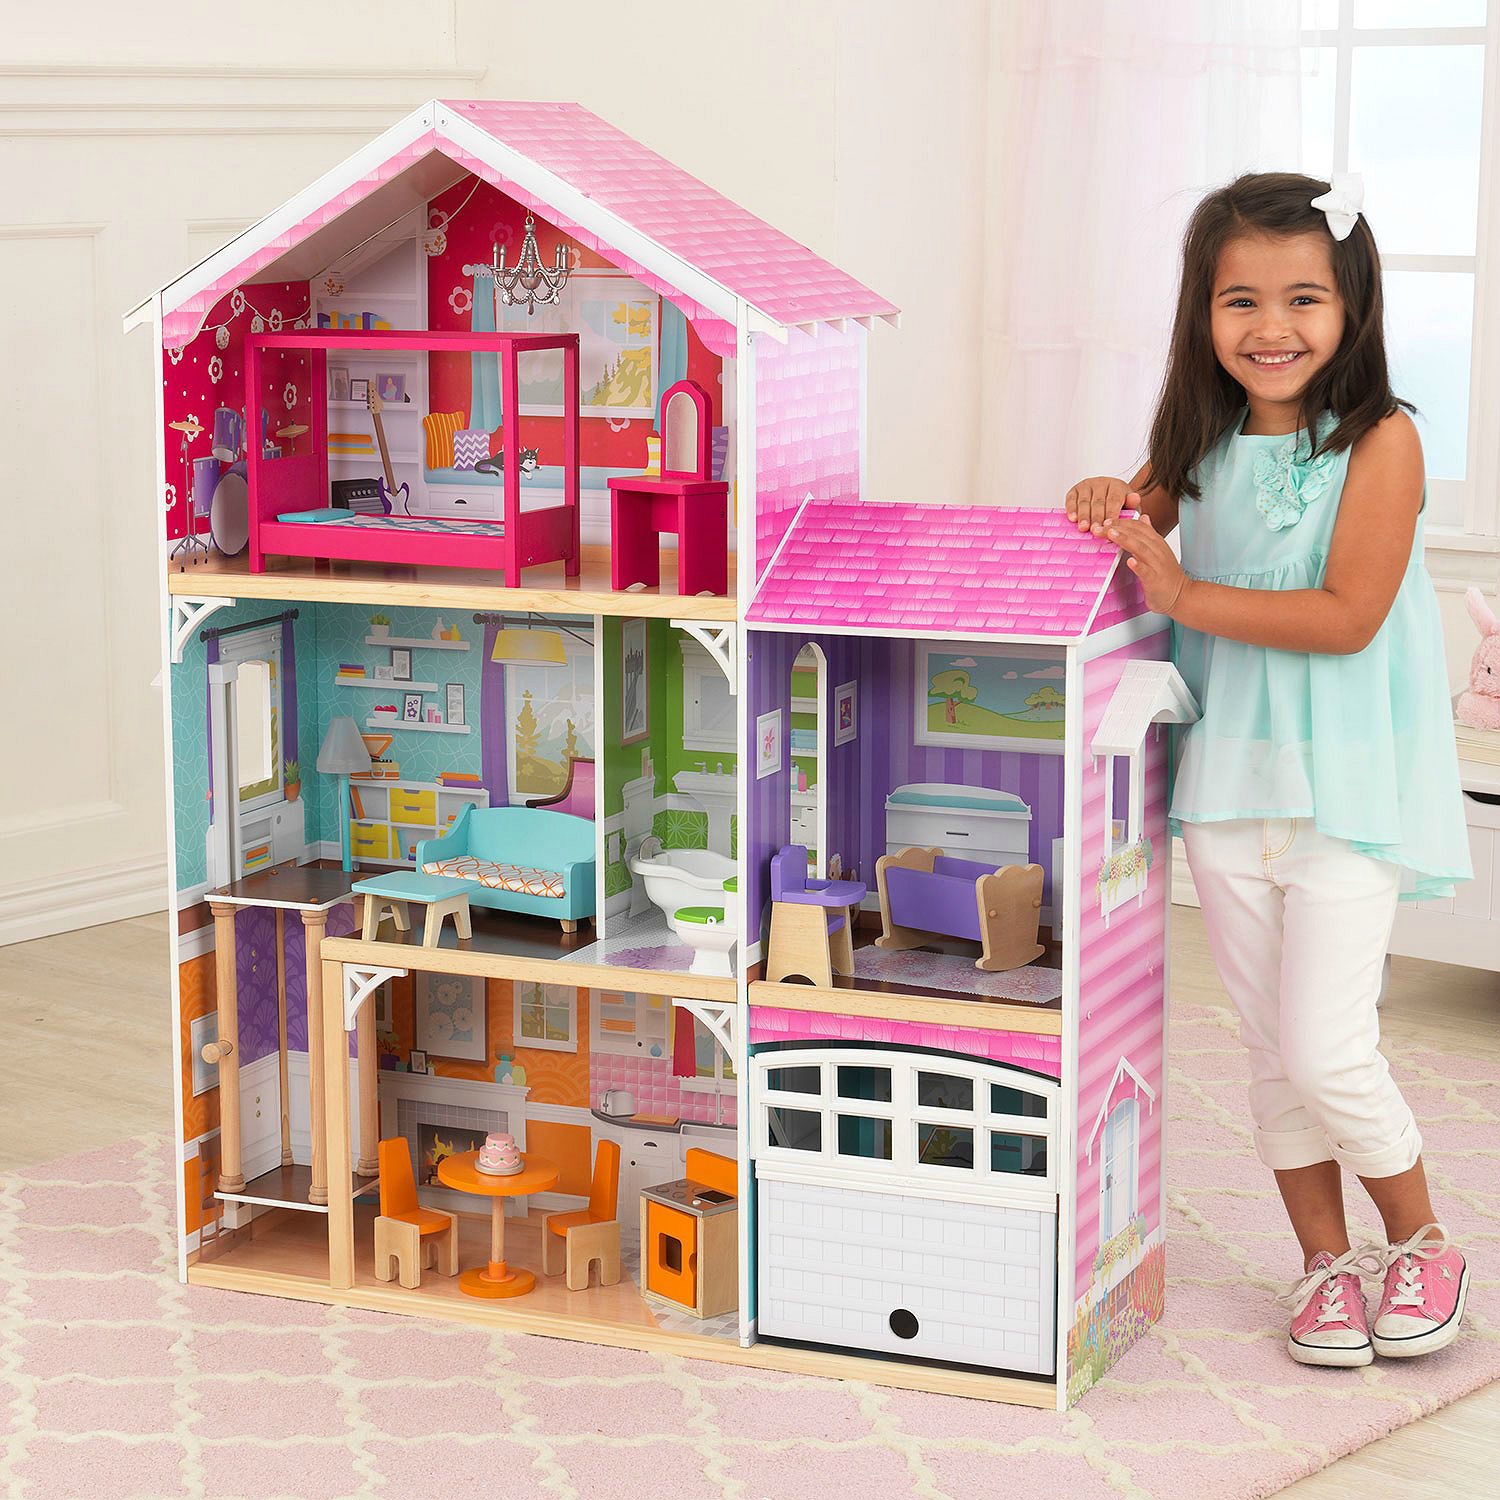 sam's barbie house